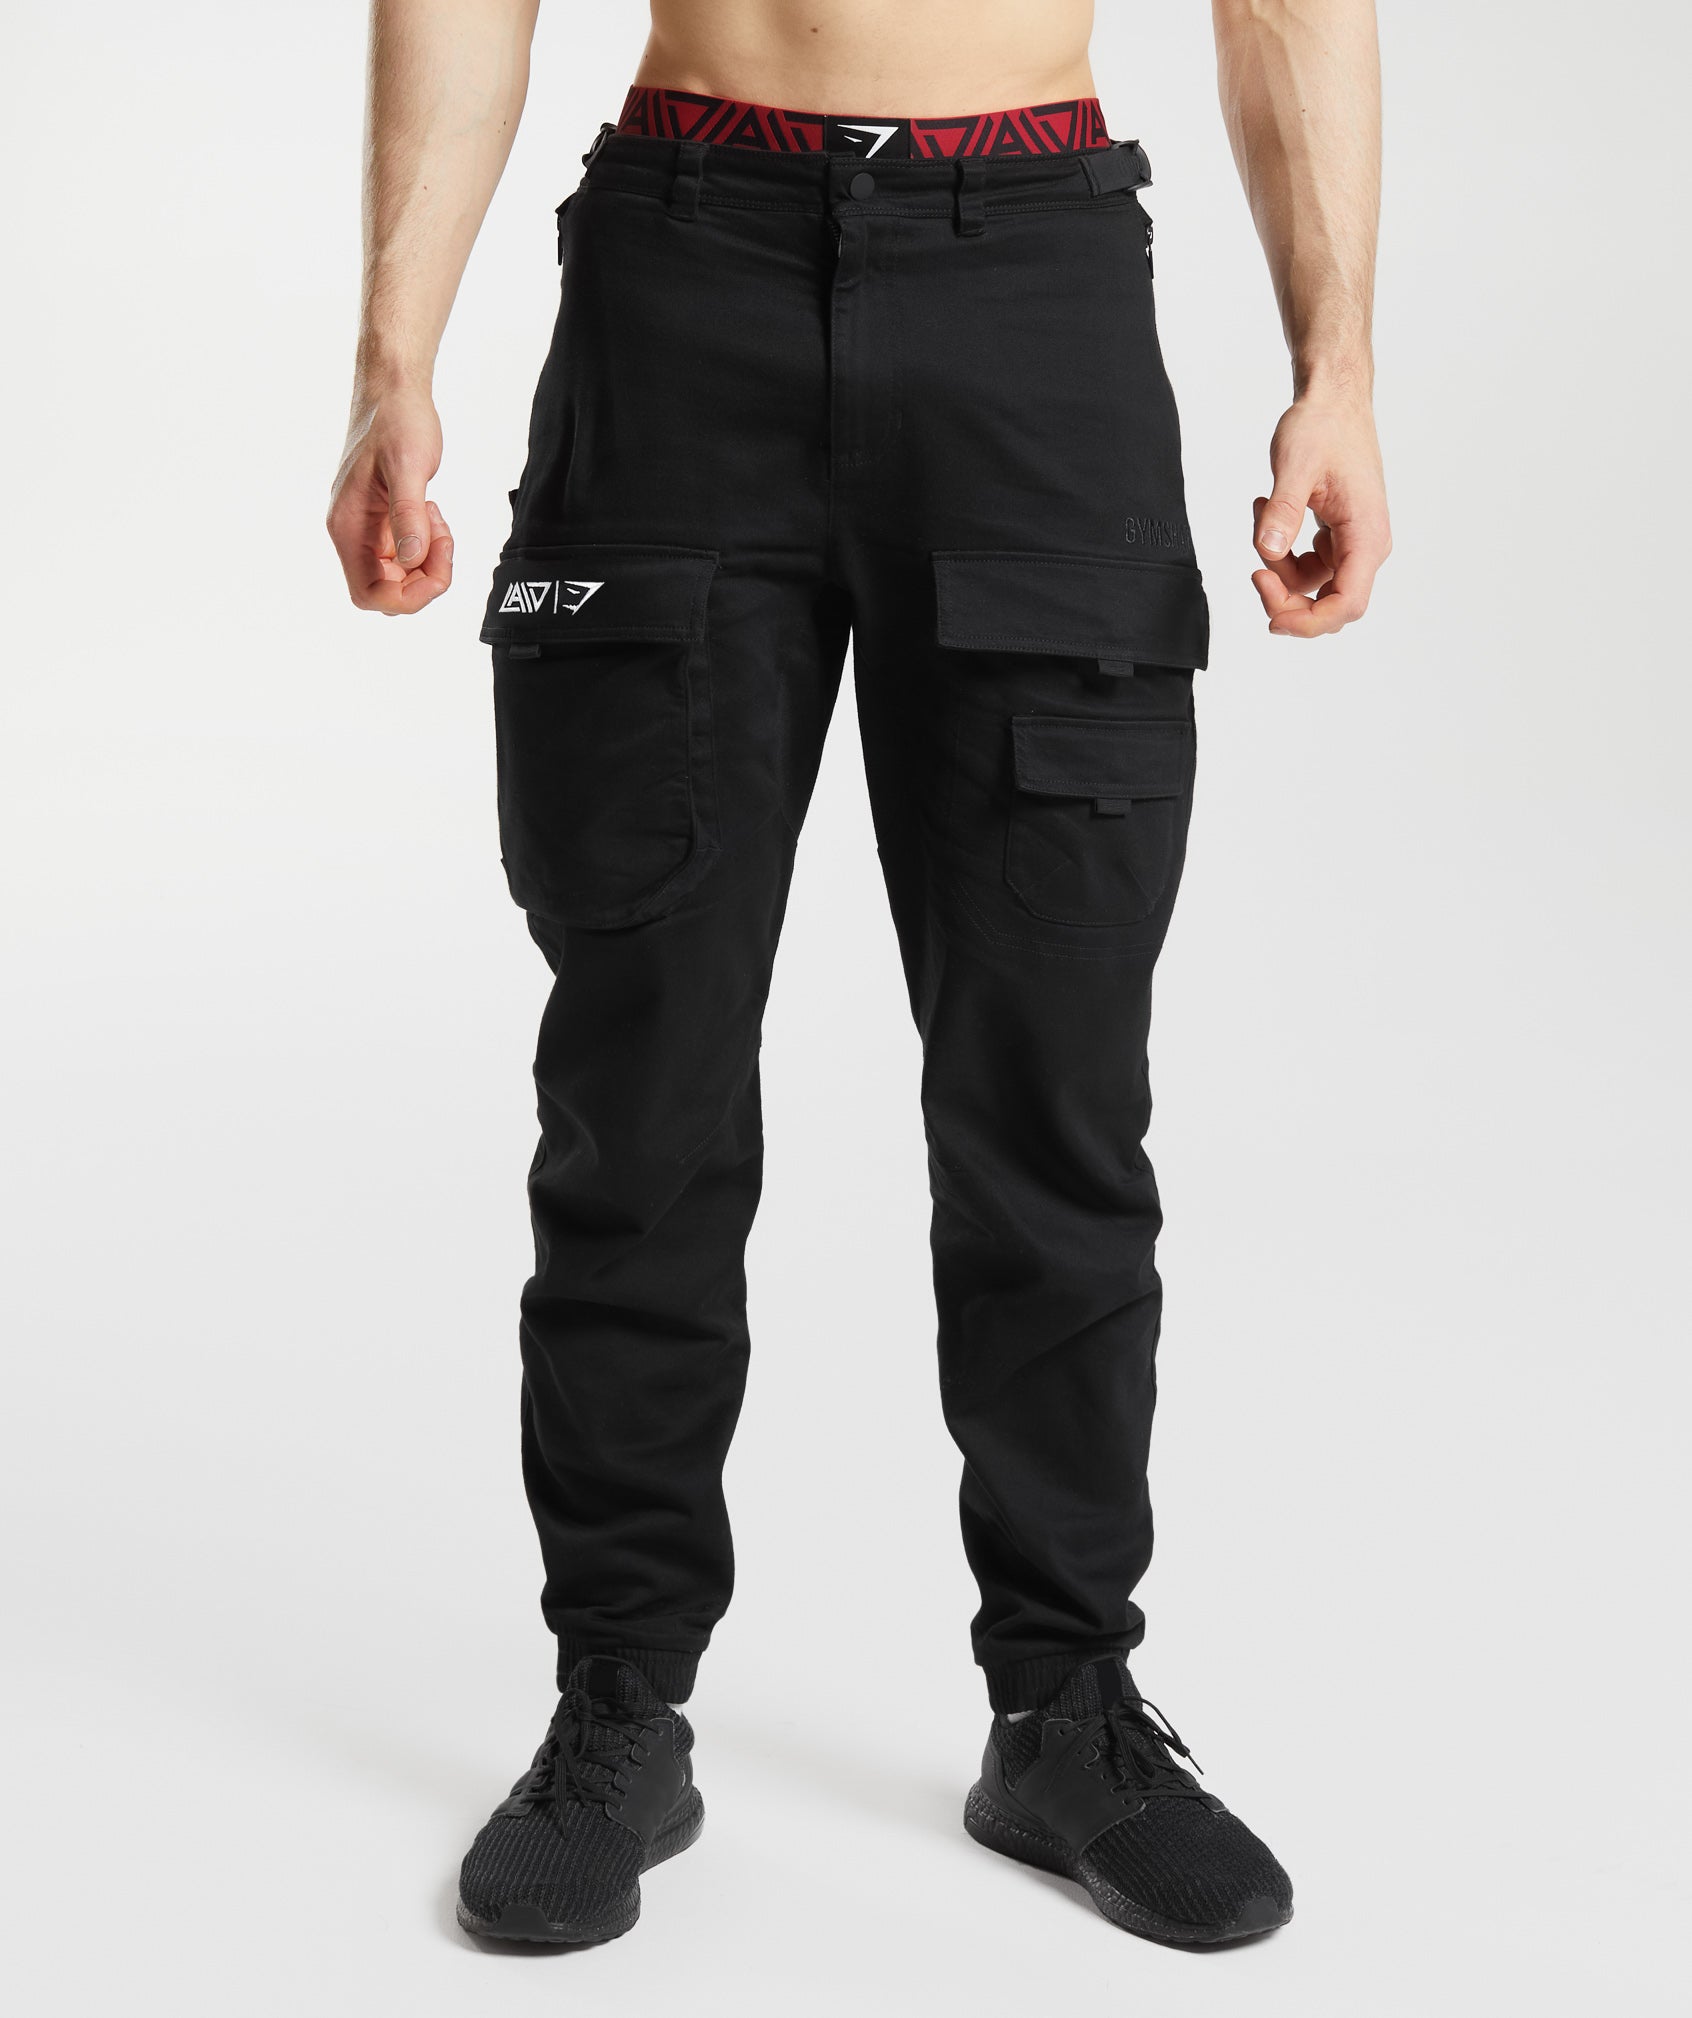 Gymshark GS x David Laid Cargo Pants - Black